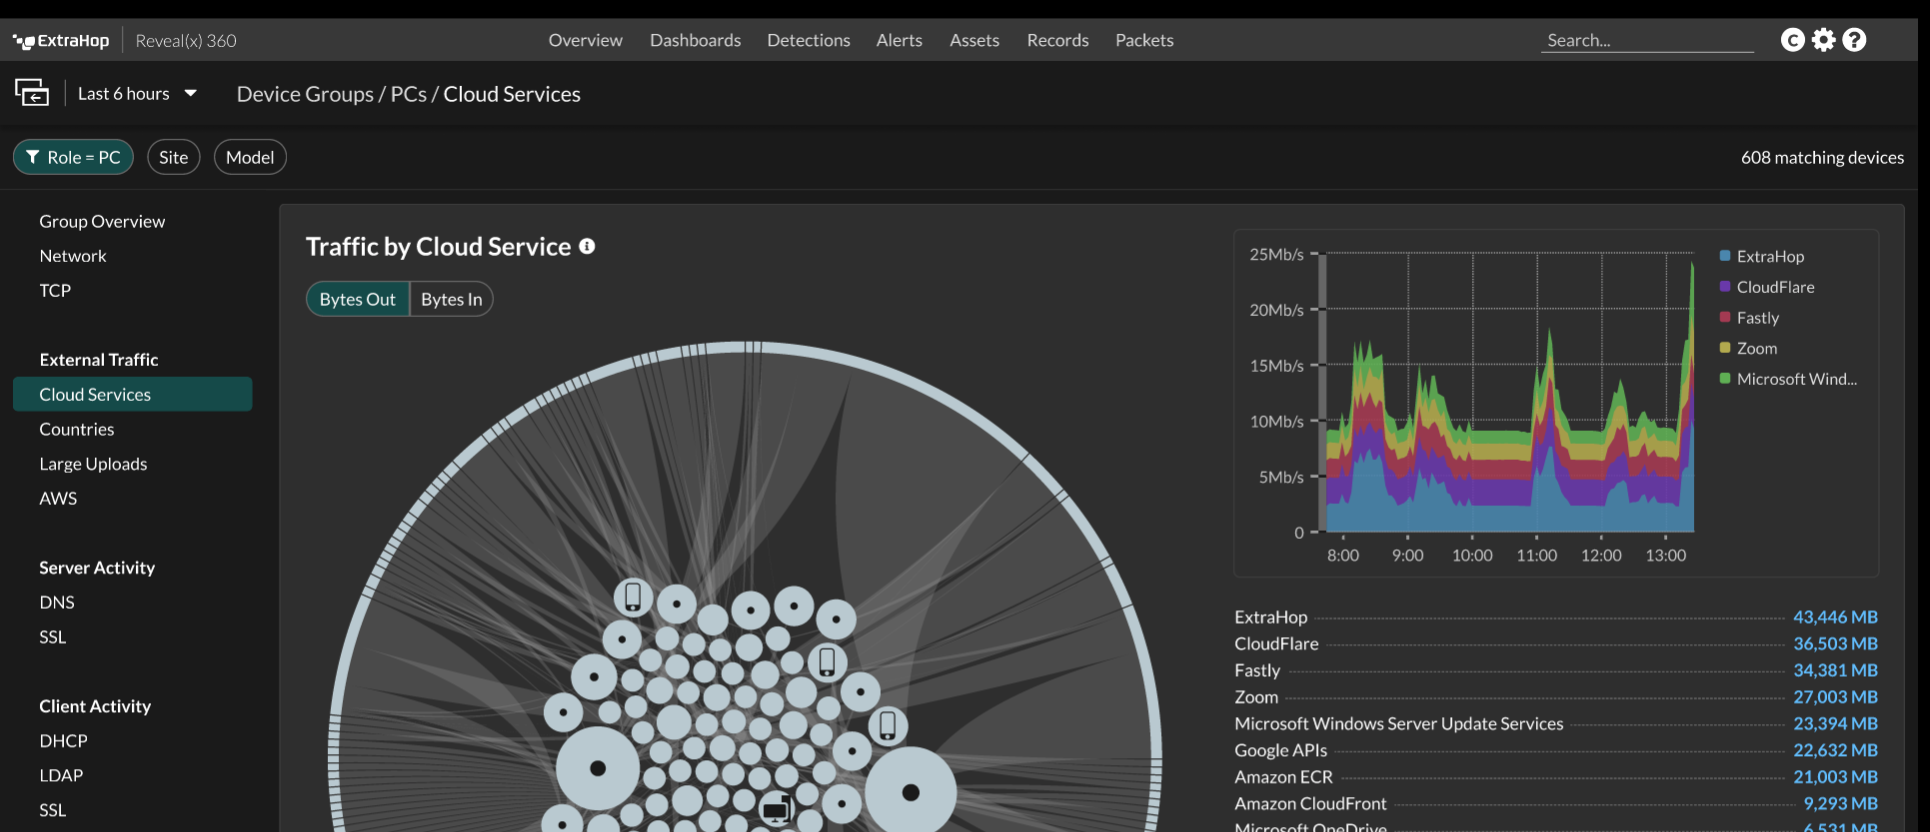 Halo visualization, traffic by cloud service